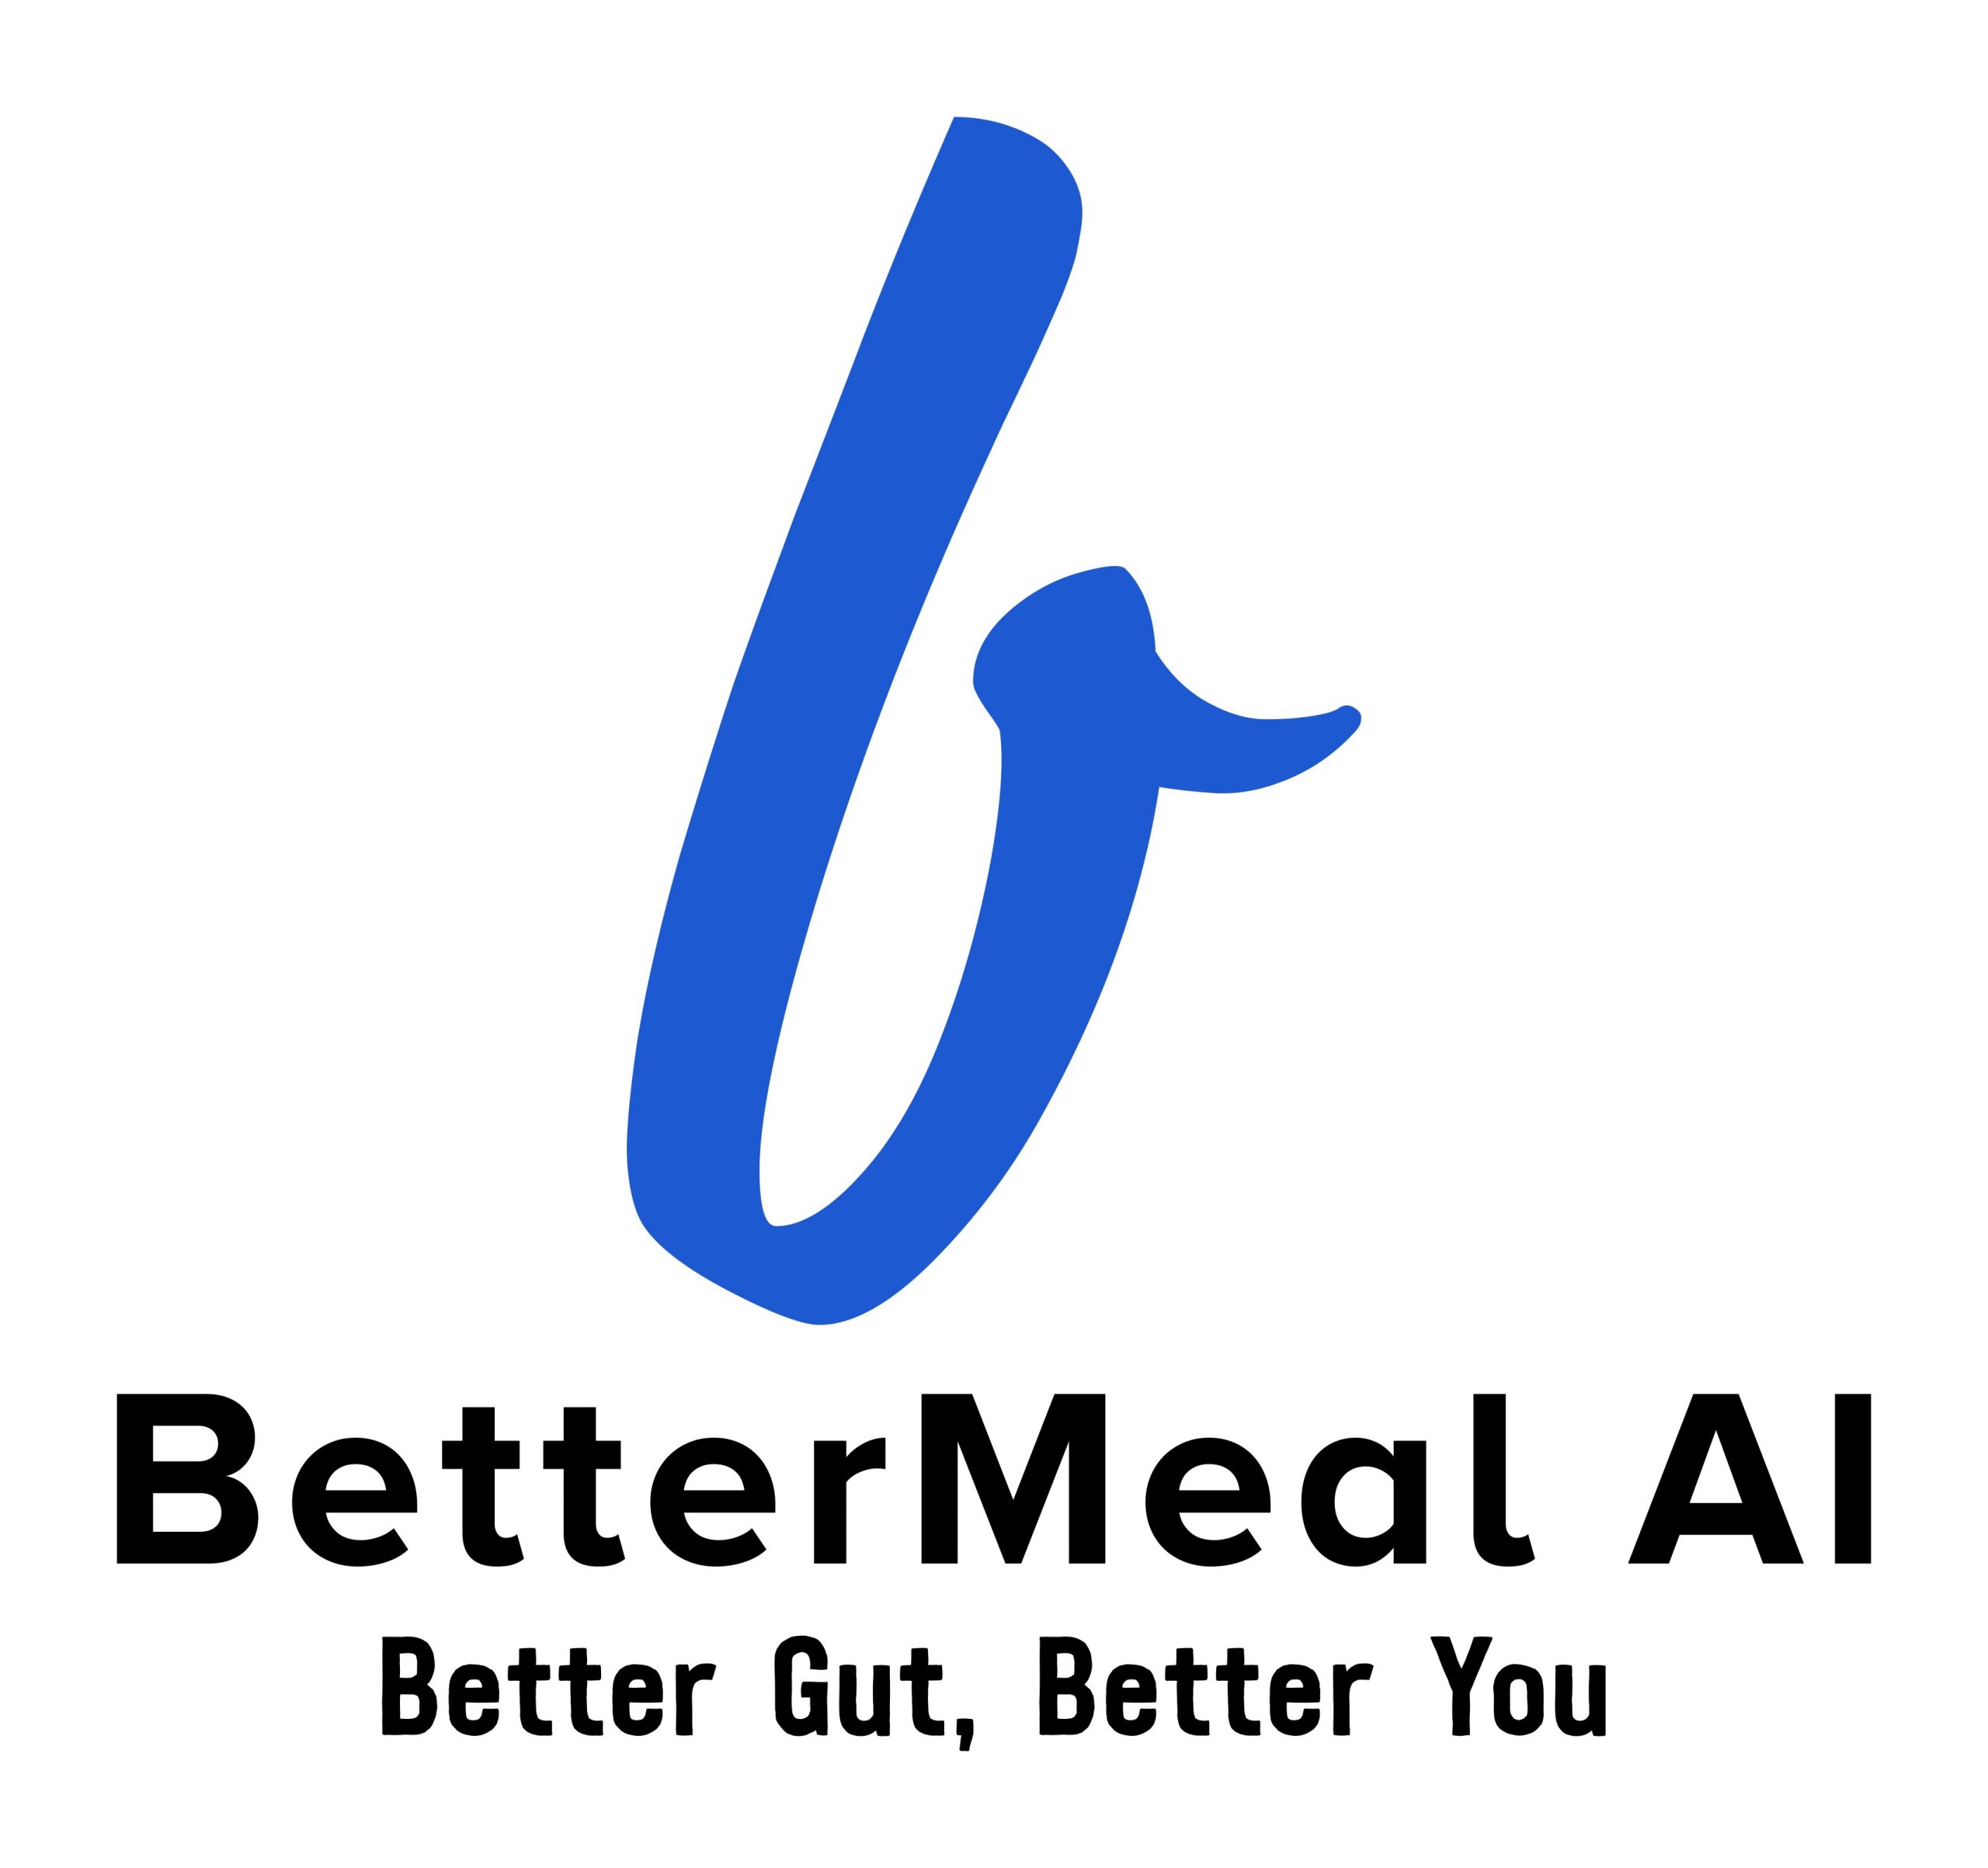 BetterMeal AI